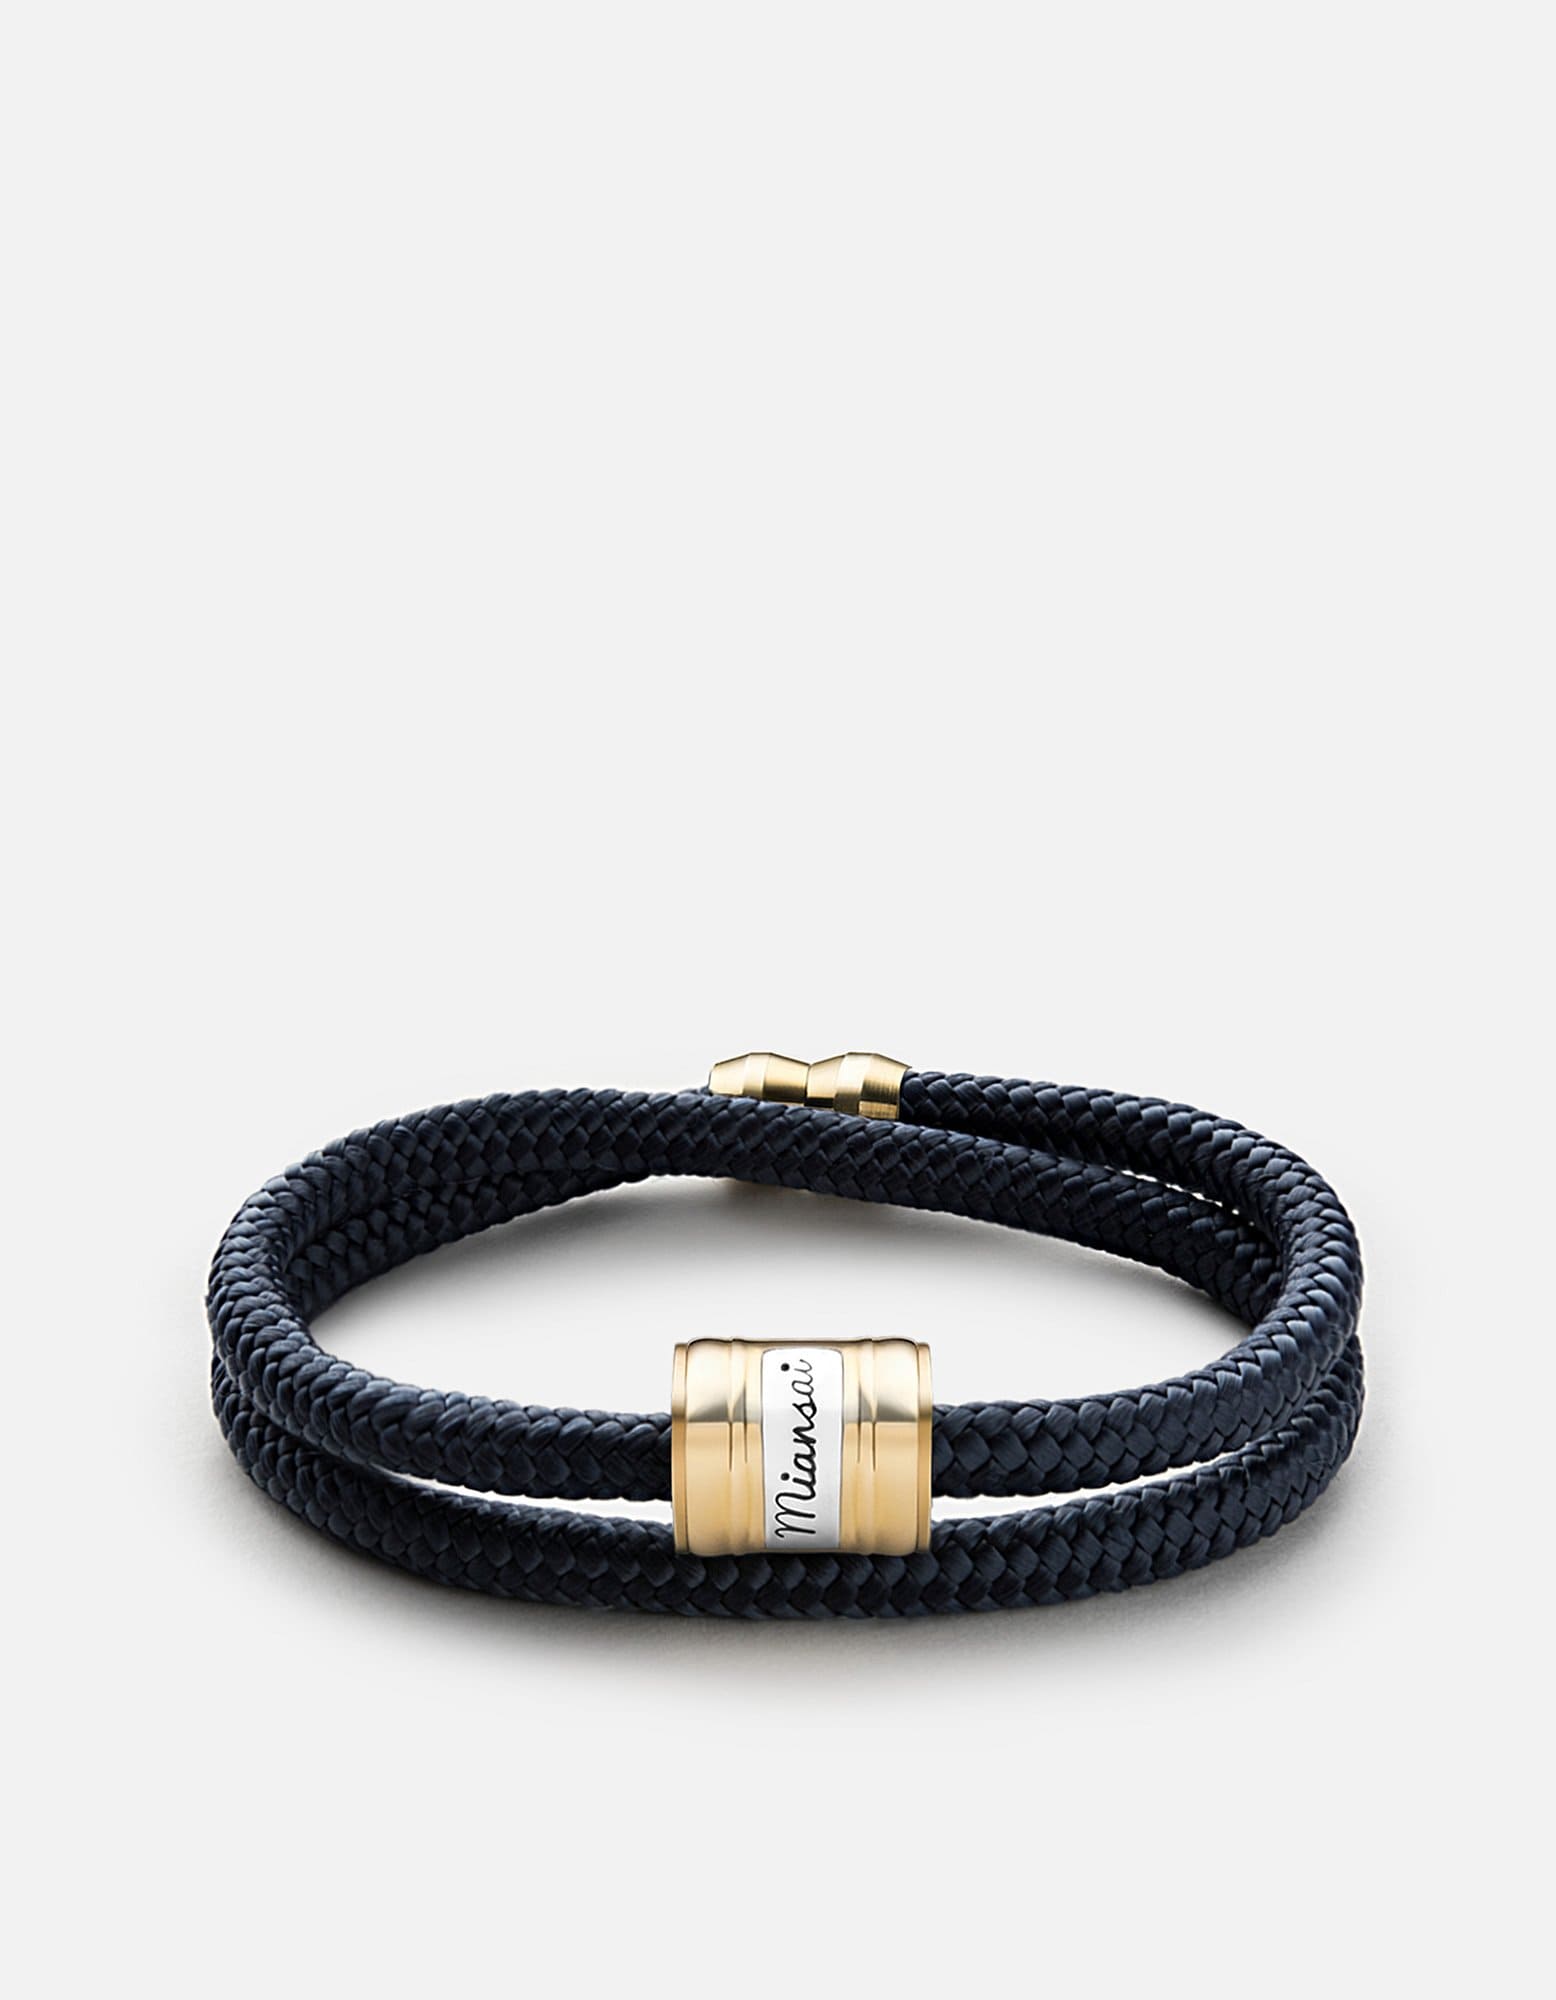 Casing Rope Bracelet, Brass | Men's Bracelets | Miansai